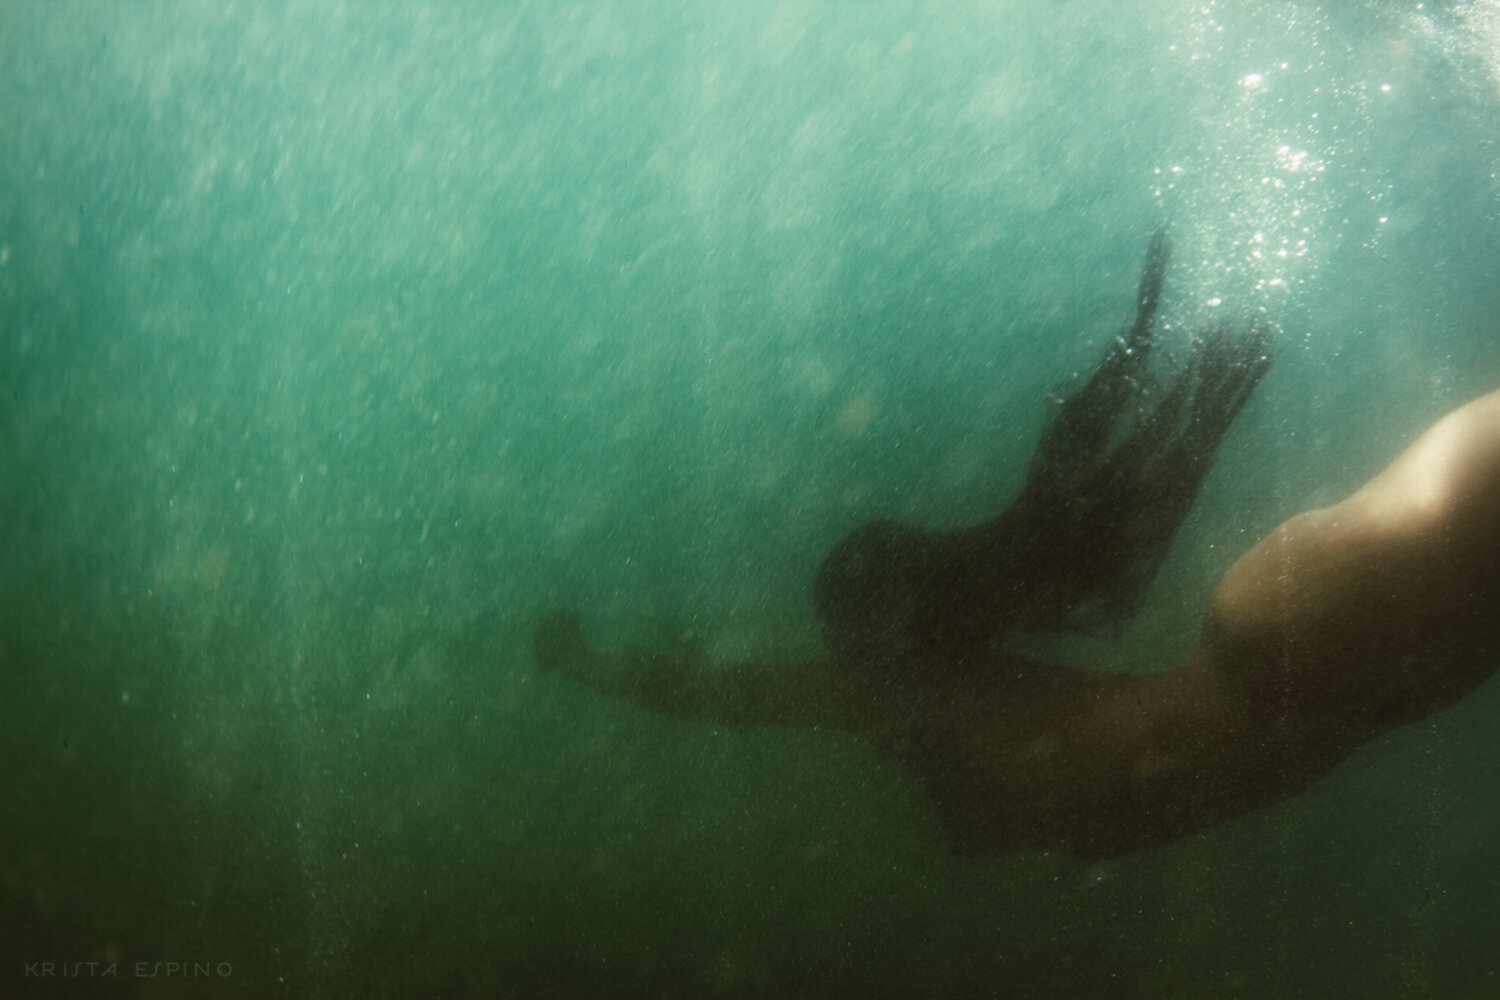 lifestyle nature photography photographer krista espino underwater nude ocean wave mermaid siren woman laguna beach california-13.jpg